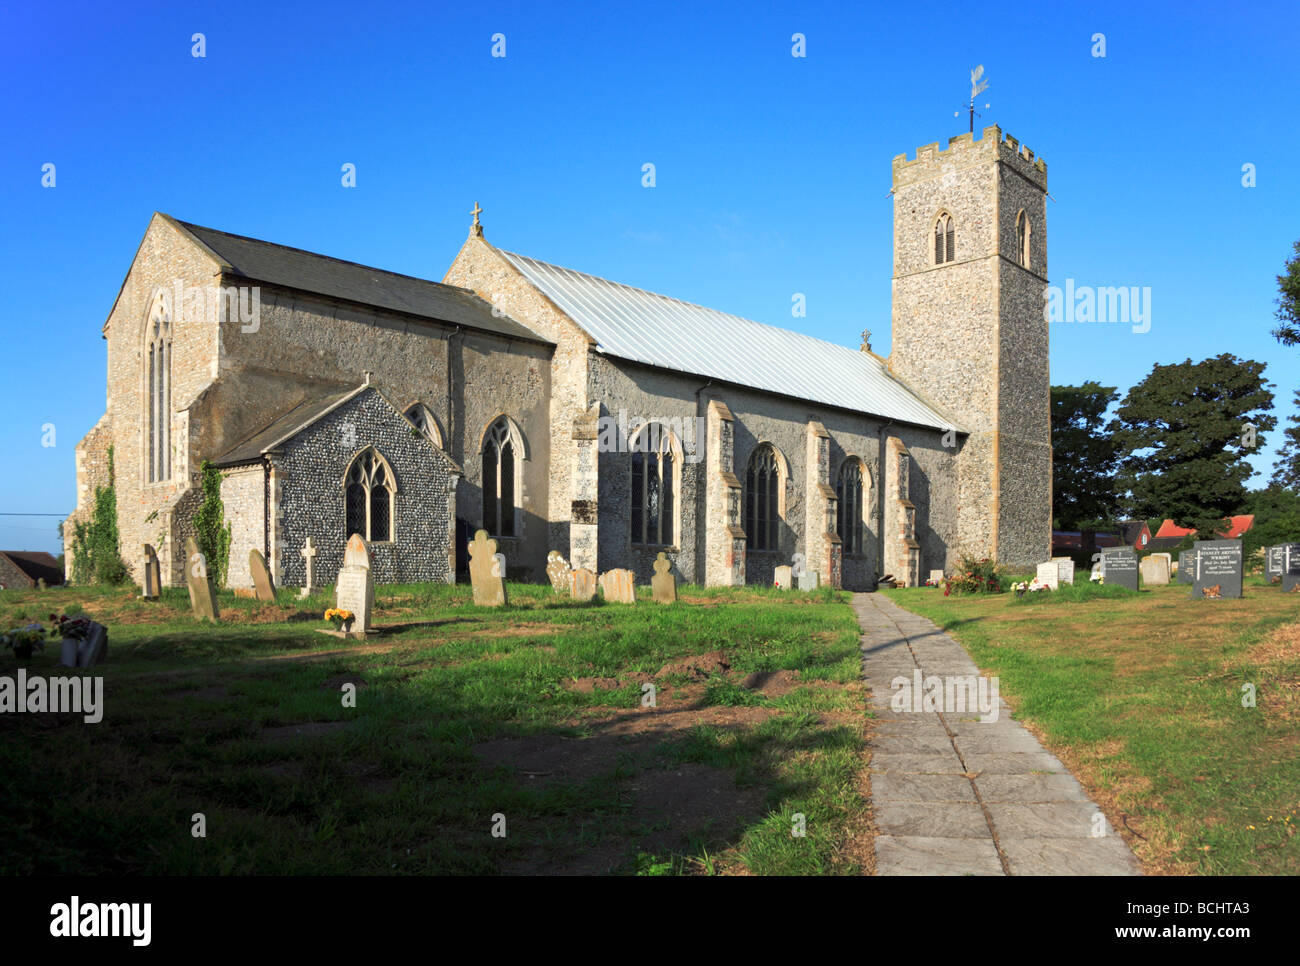 Church of Saints Peter and Paul at Knapton, Norfolk, United Kingdom. Stock Photo